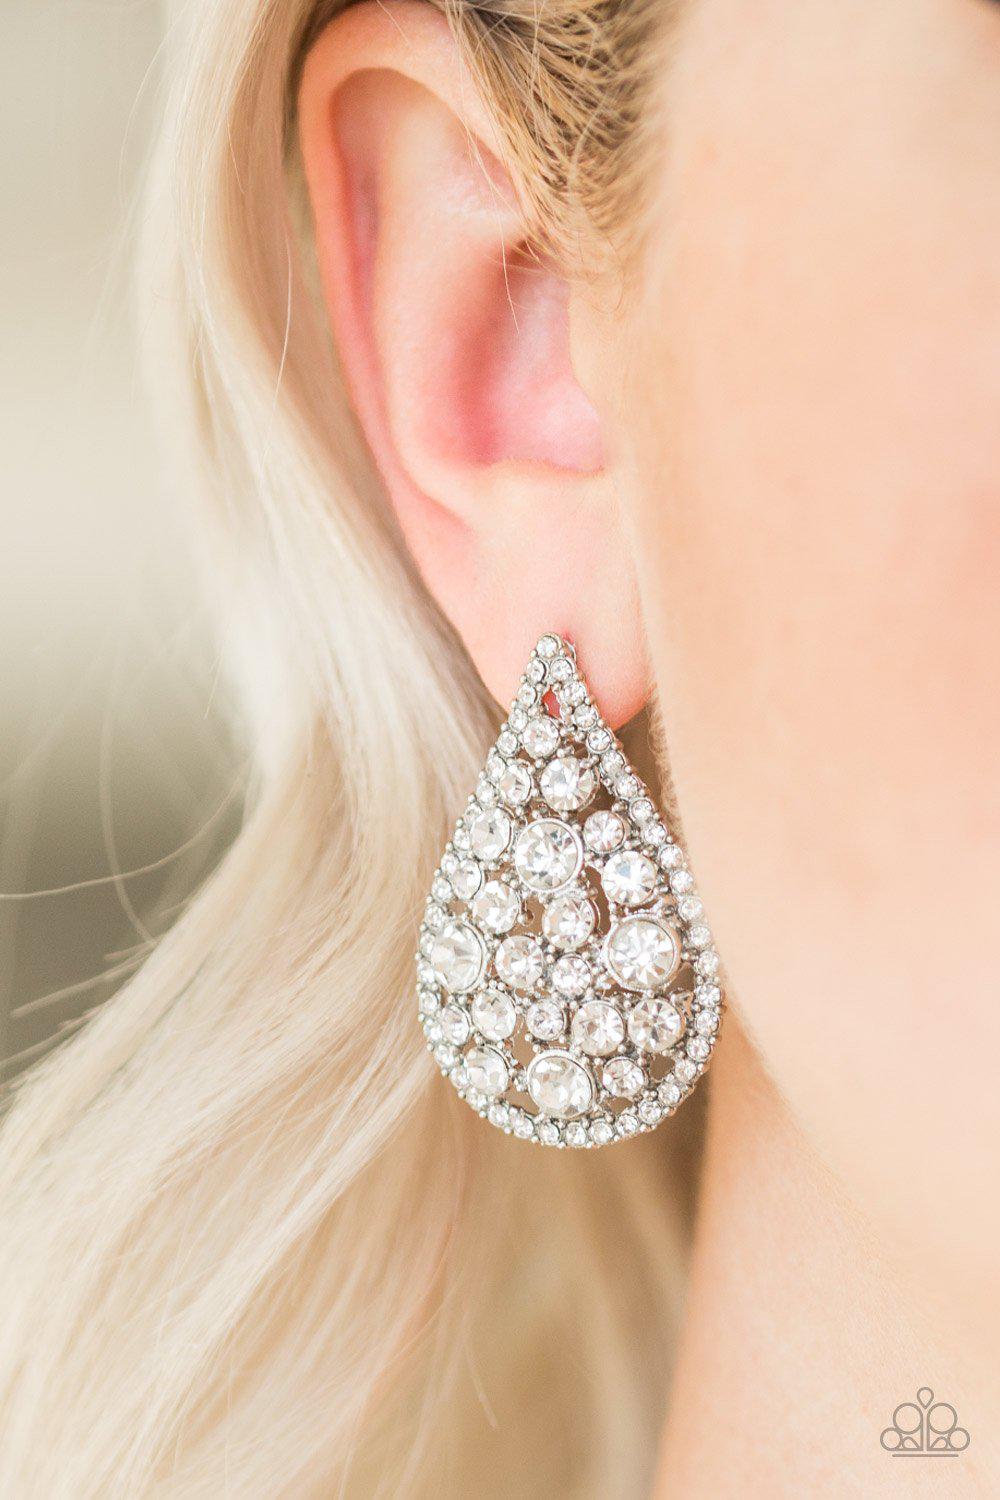 REIGN Storm White Rhinestone Teardrop Post Earrings - Paparazzi Accessories - model -CarasShop.com - $5 Jewelry by Cara Jewels